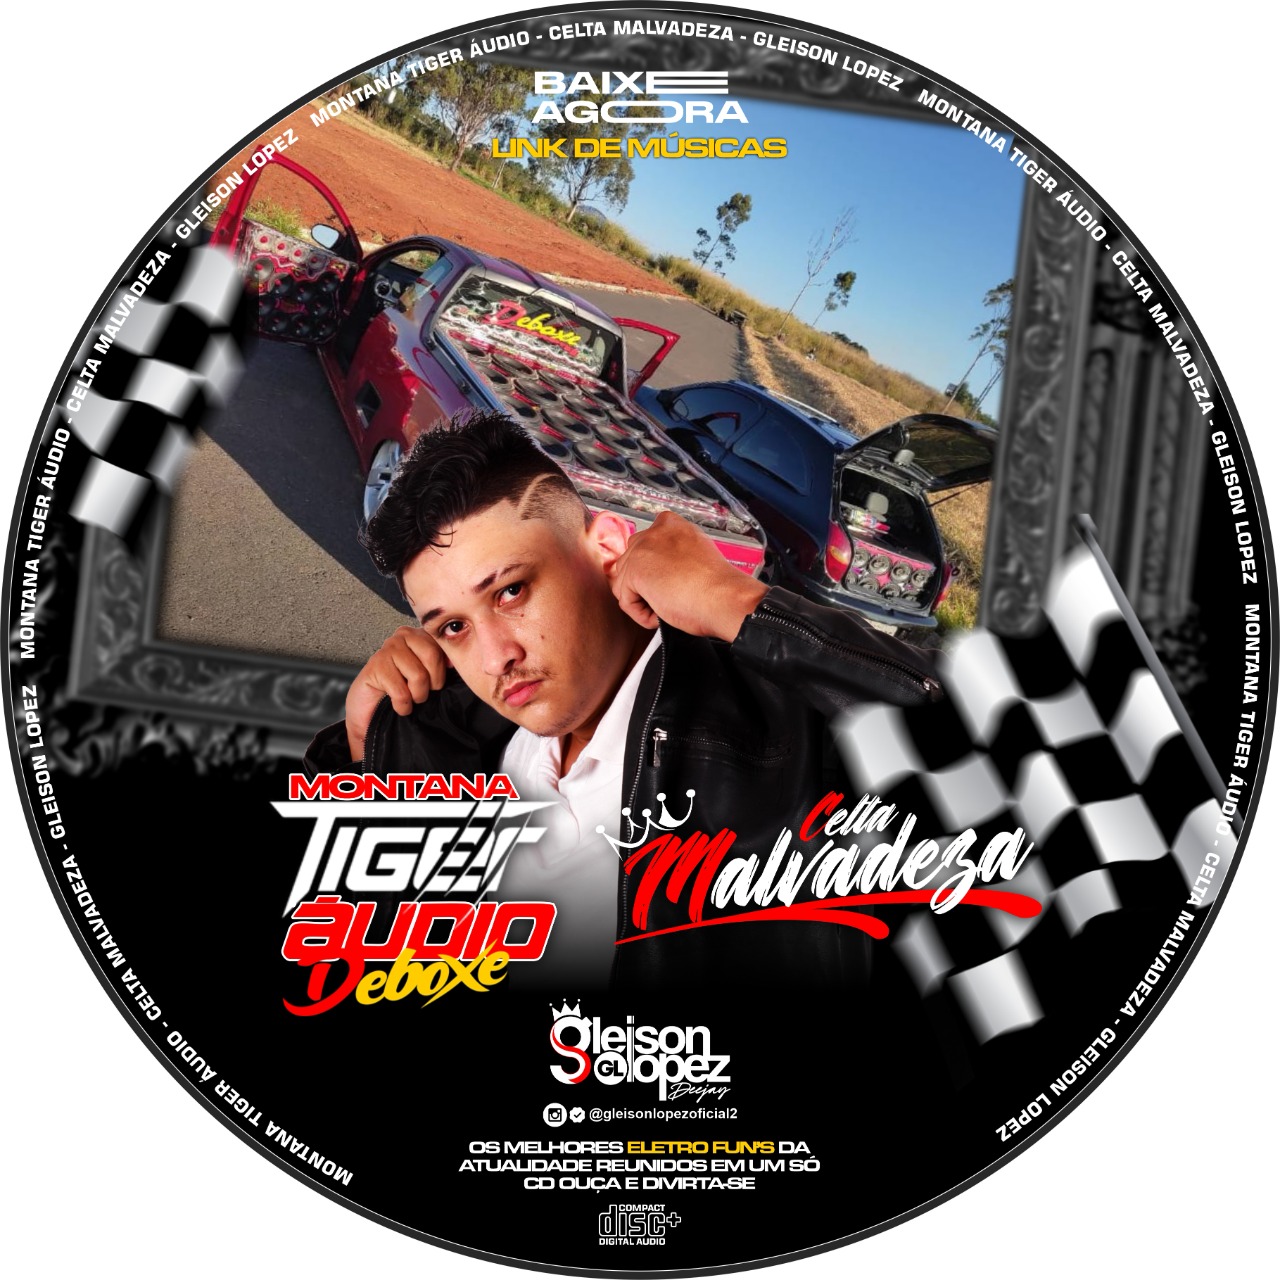 Celta Malvadeza + Montana Tiger Áudio - Gleison Lopez EP EEEEEELETRO FUNK